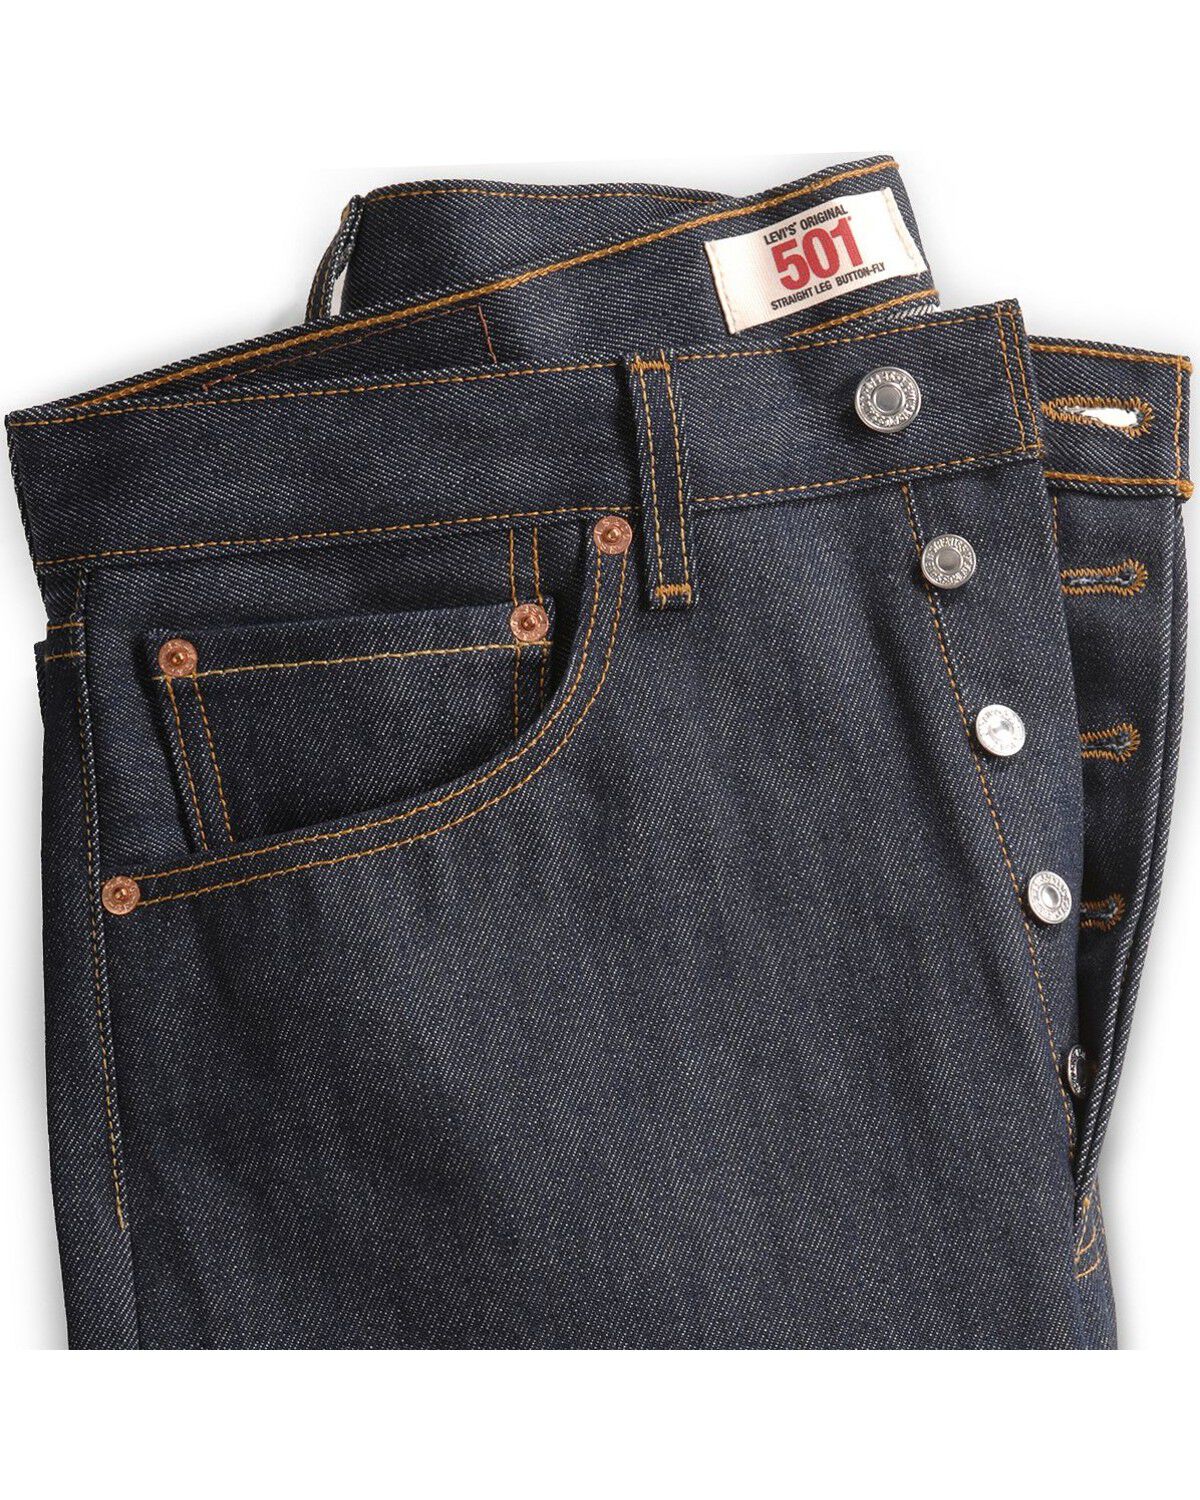 Levi's Men's 501 Original Jeans